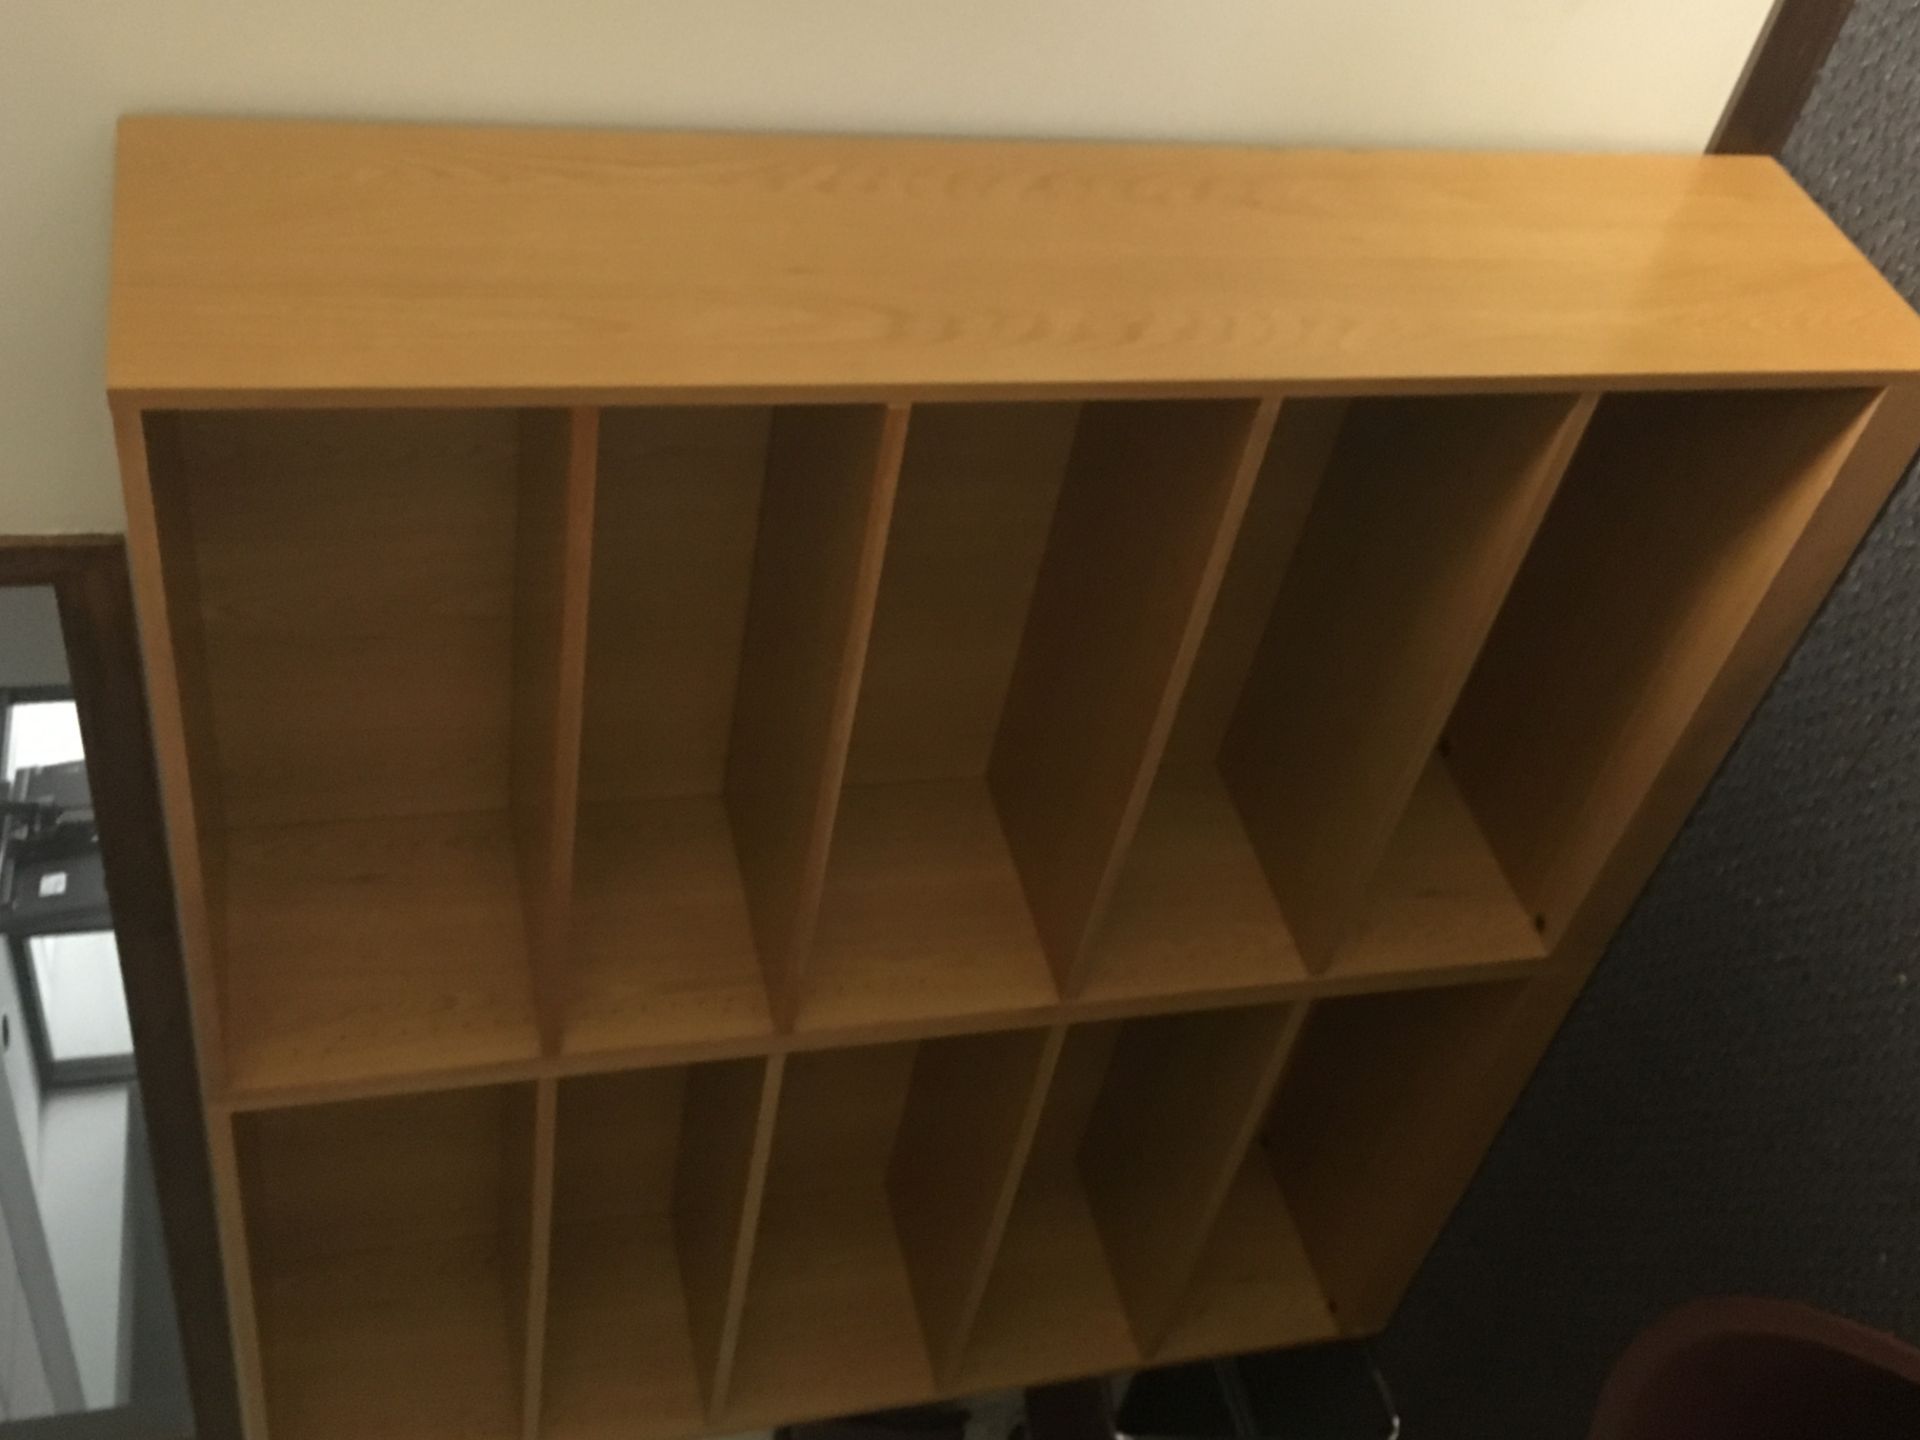 Steelcase Oak 6' x 36" adjustable shelf bookcases, choice of 2